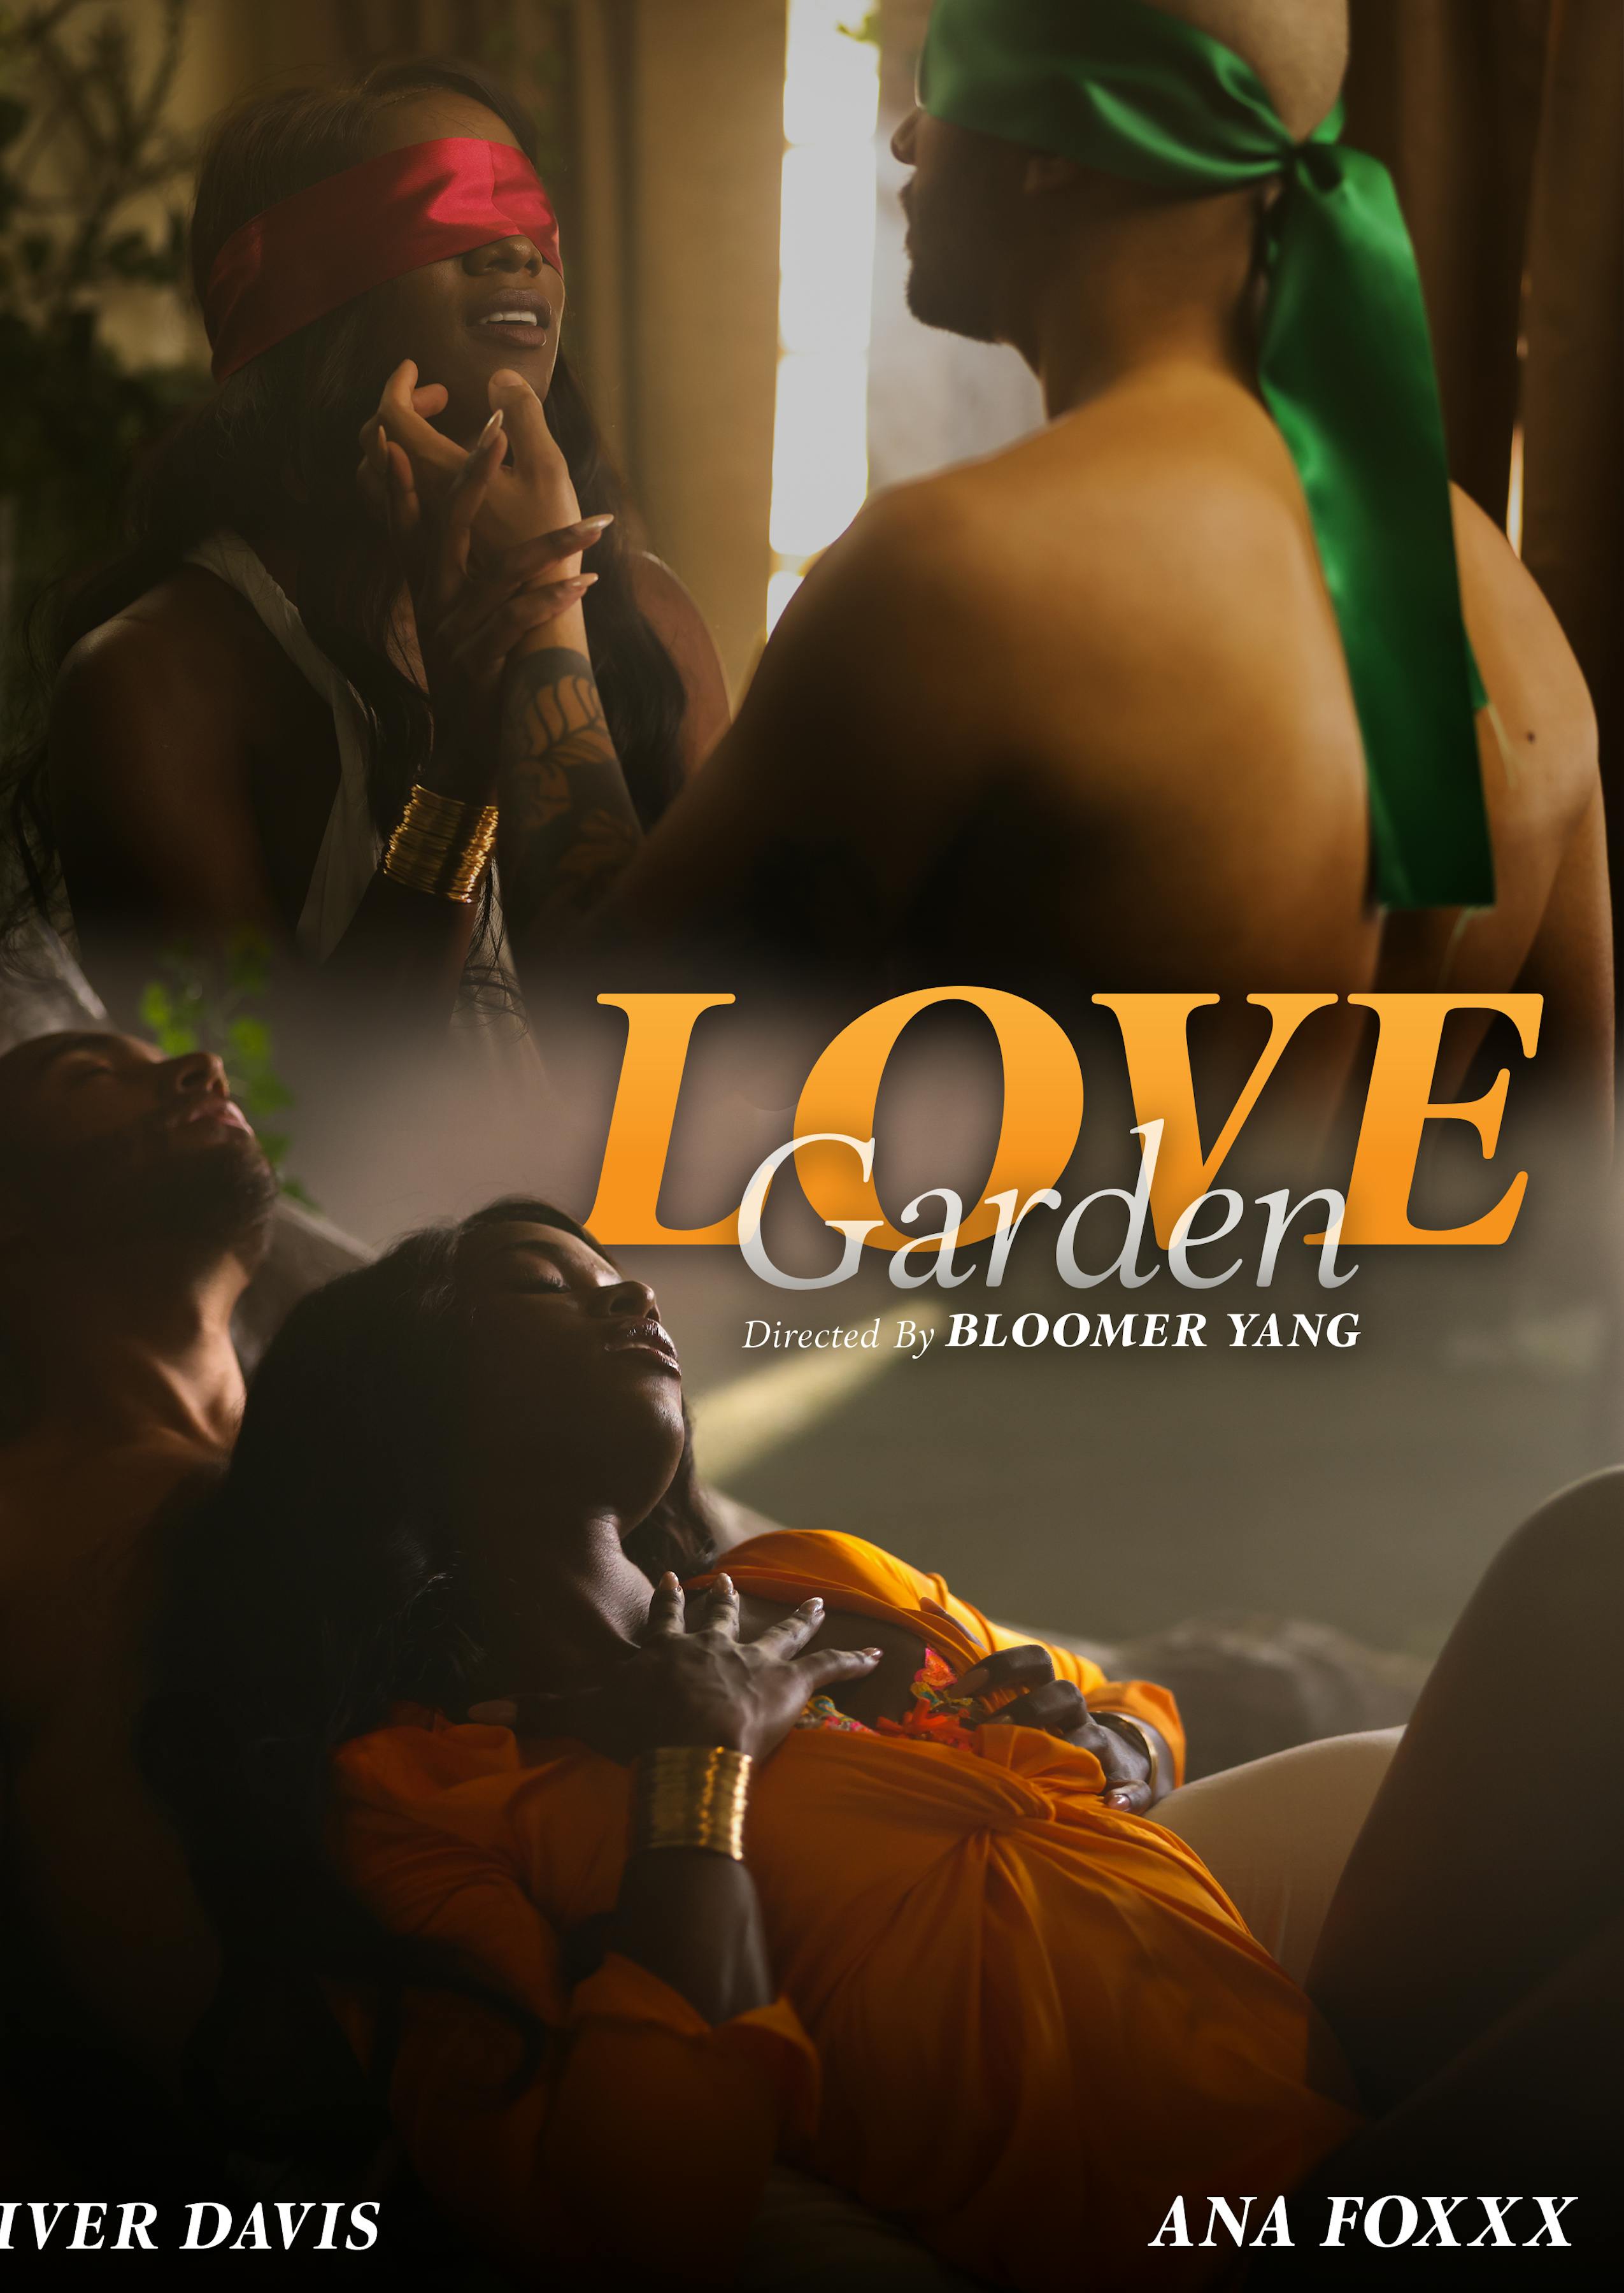 Love Garden